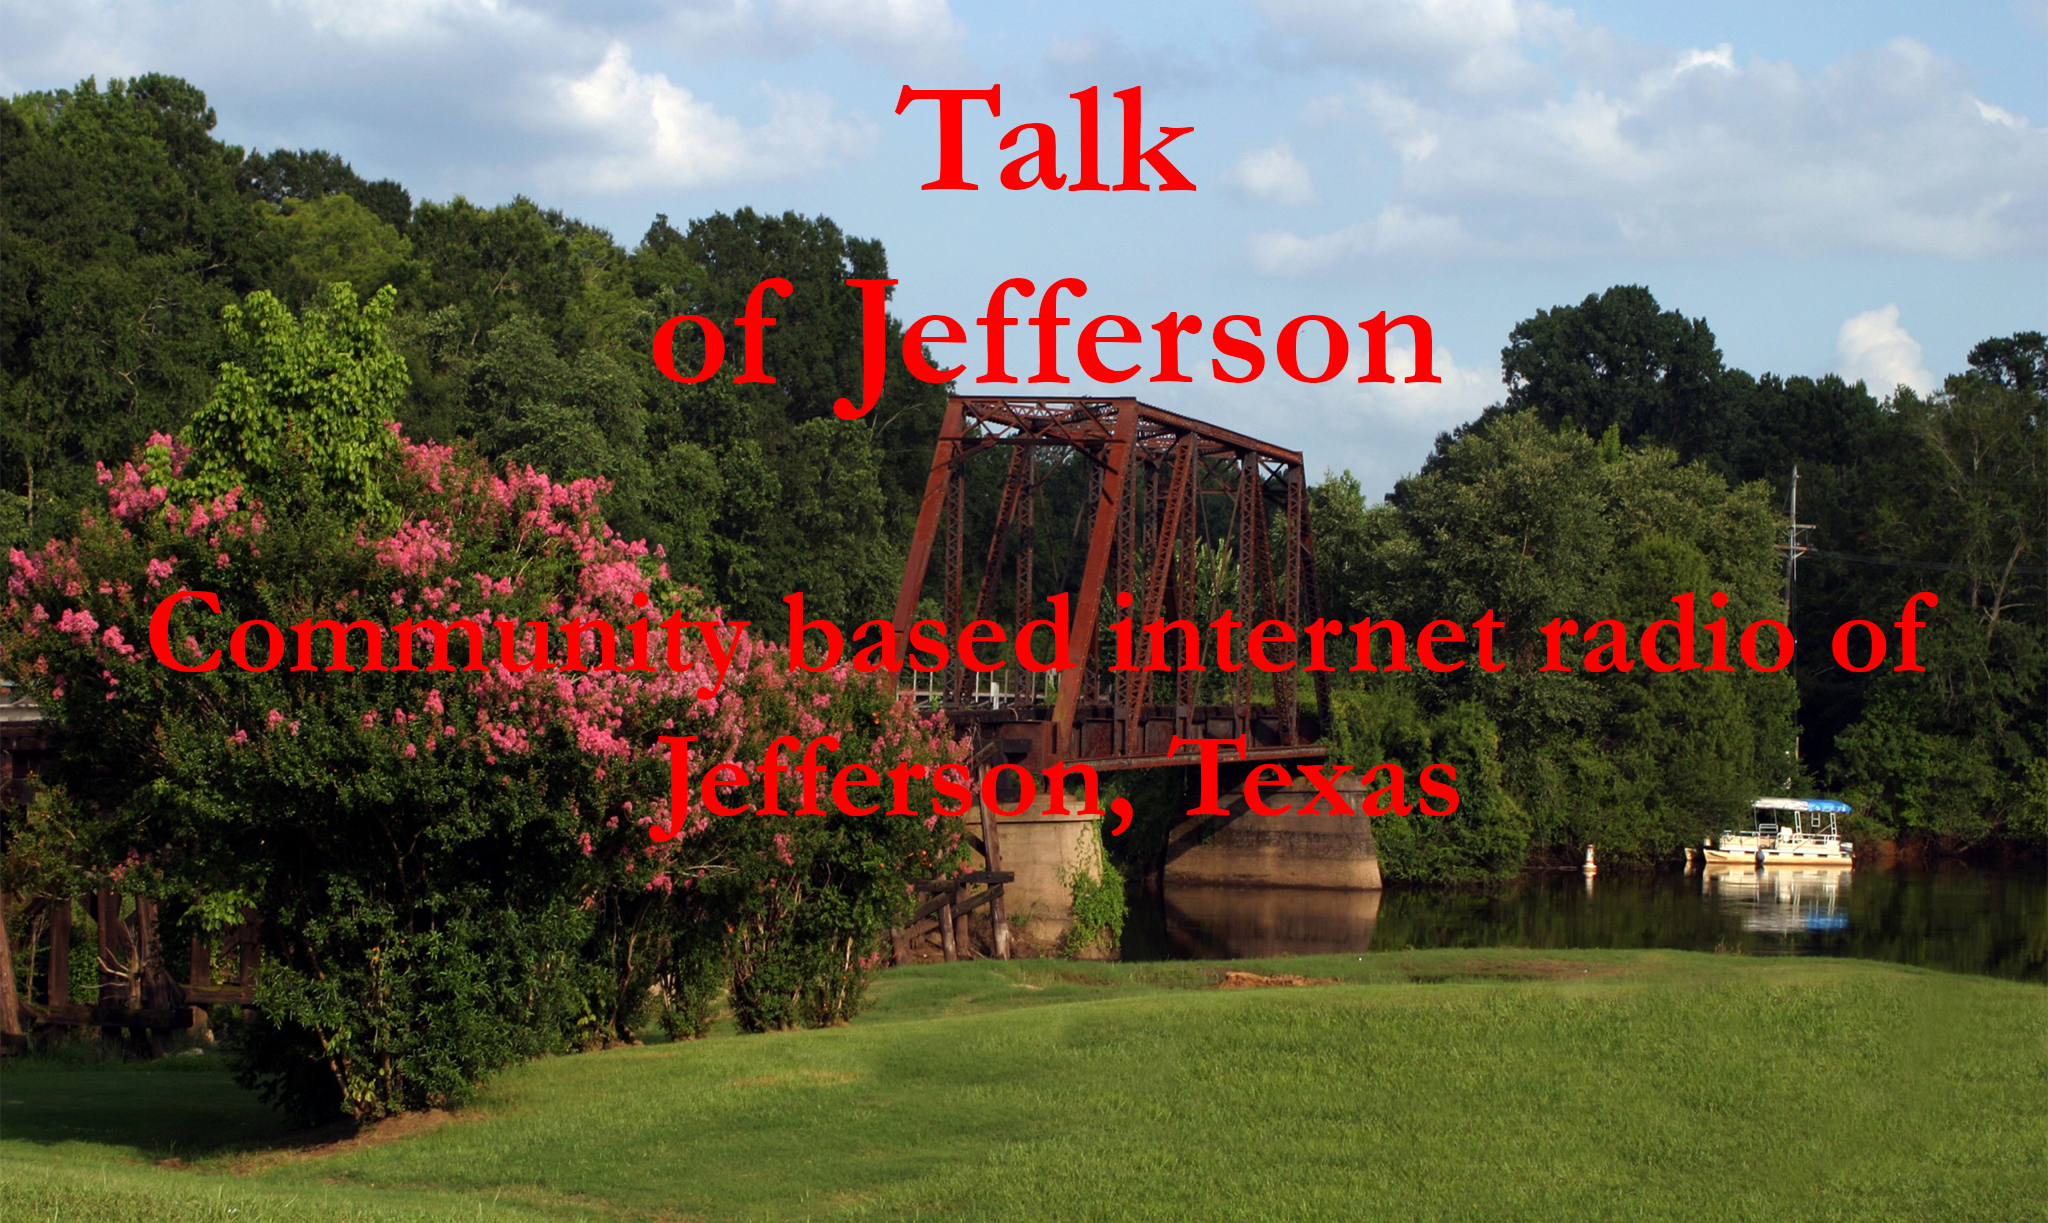 Talk of Jefferson, Texas